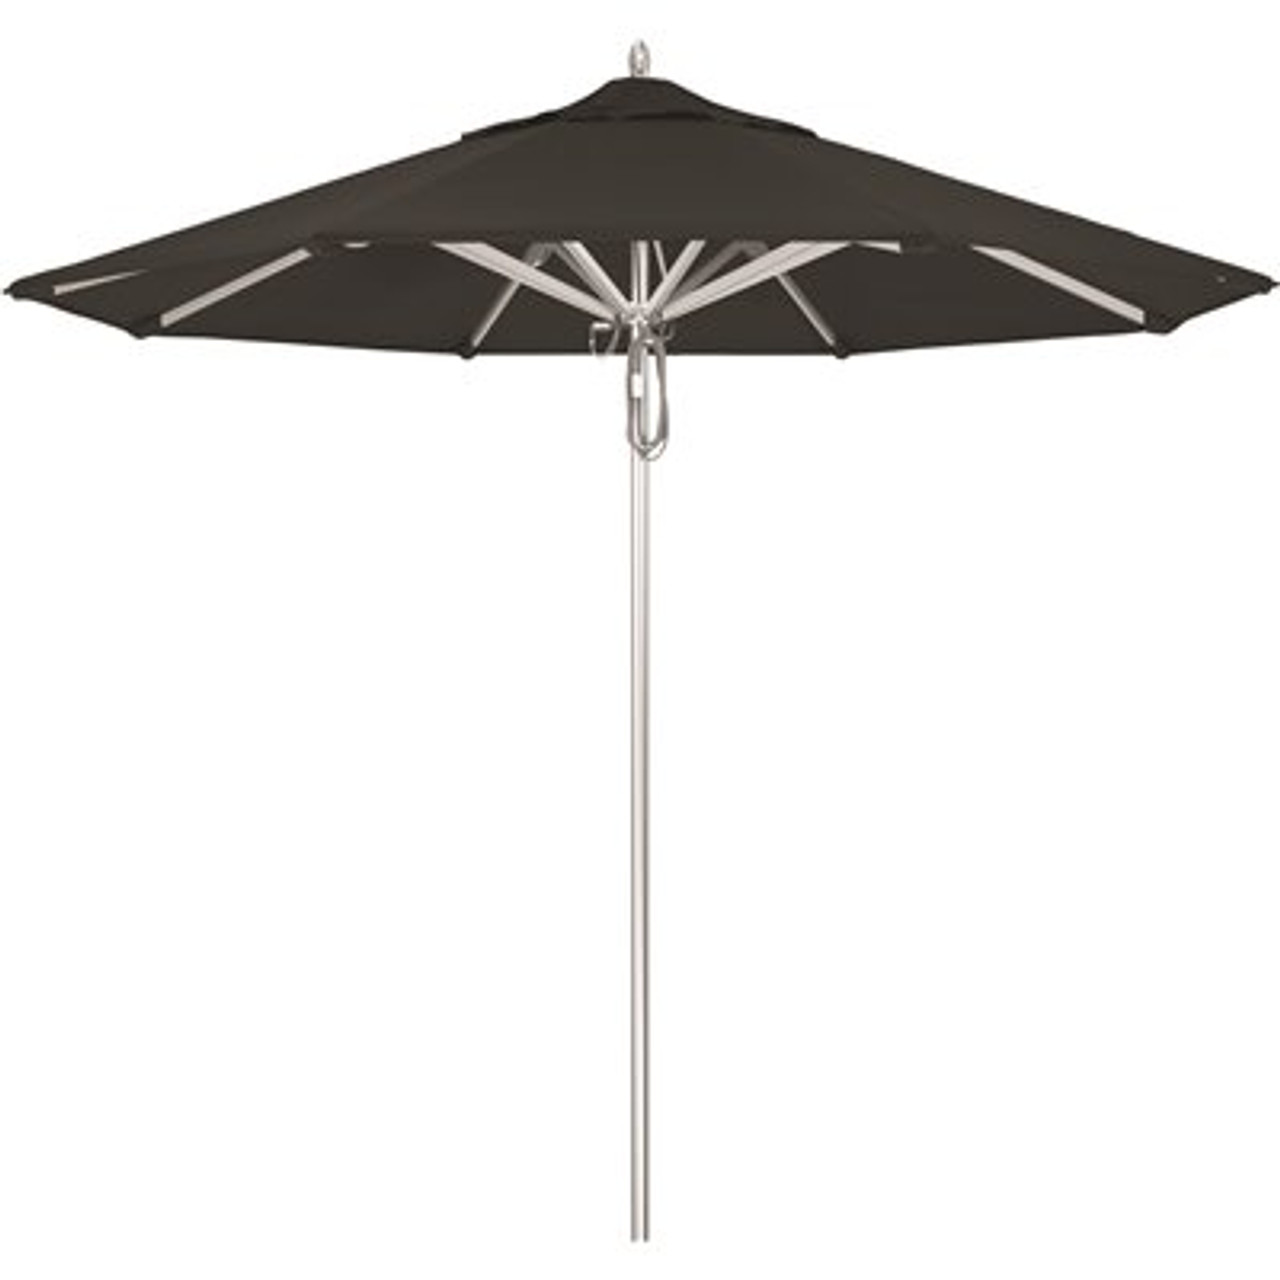 California Umbrella 9 ft. Silver Aluminum Commercial Market Patio Umbrella with Pulley Lift in Black Sunbrella